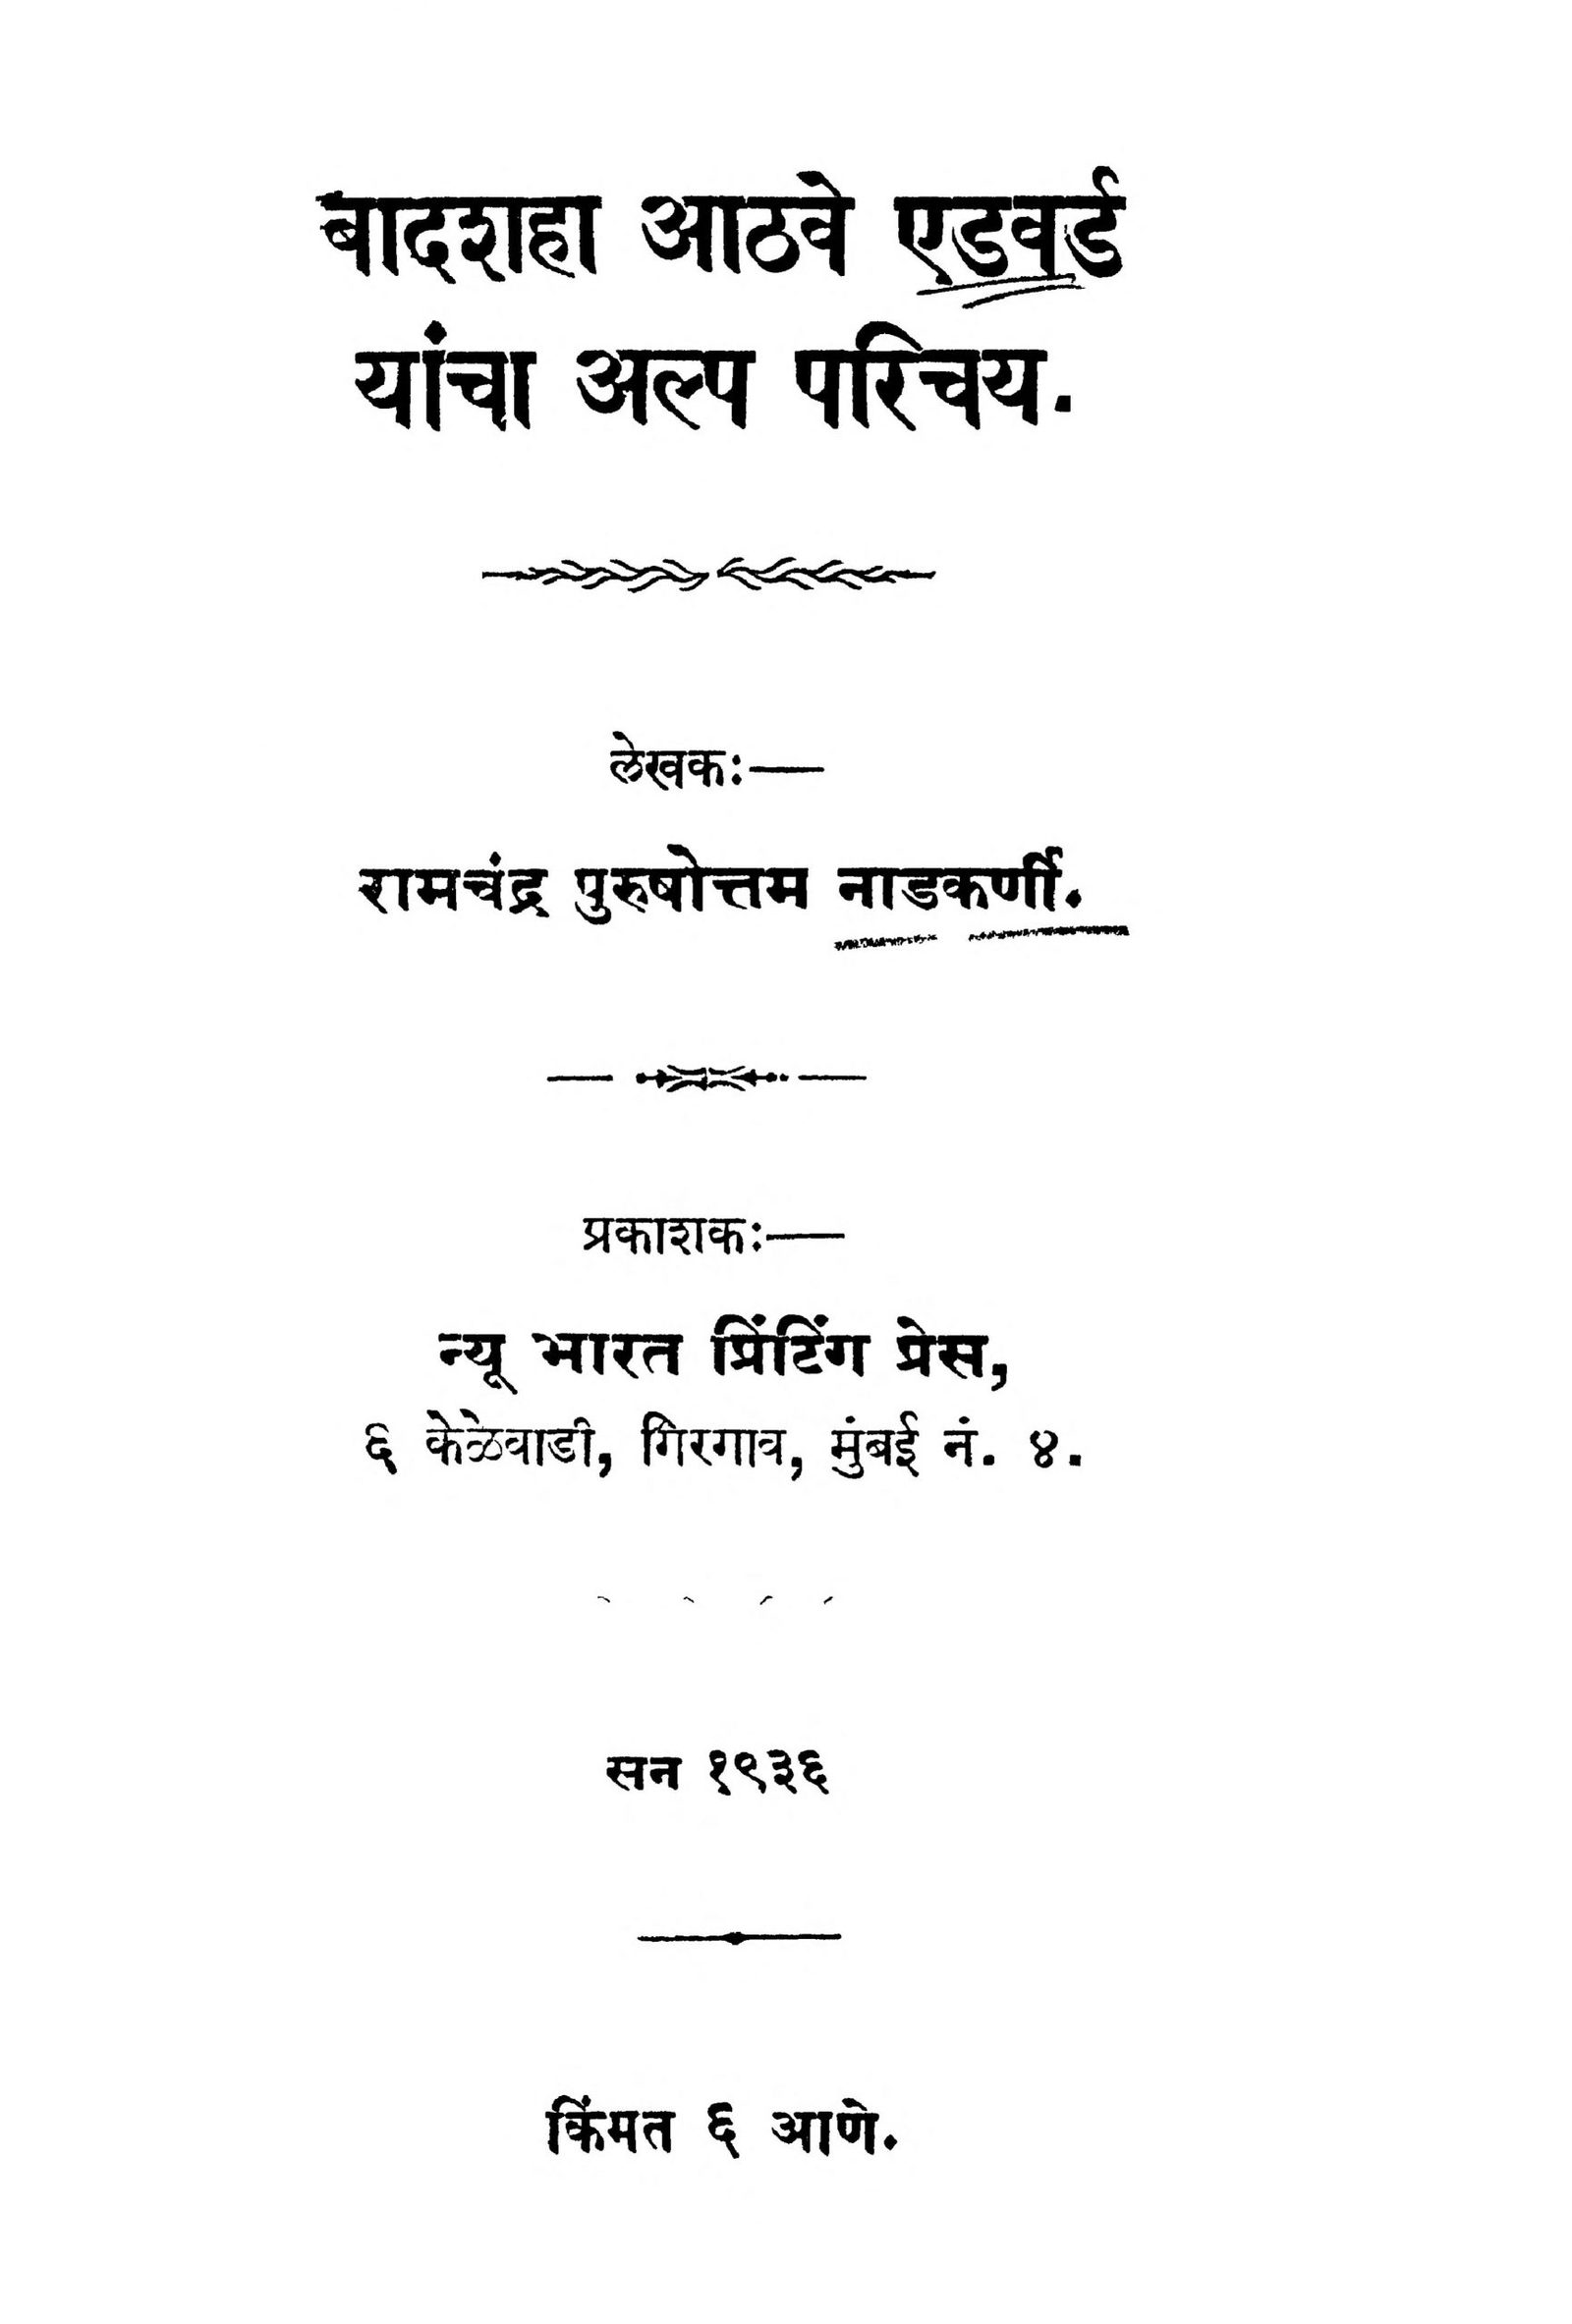 Badasaha Aṭhave Eḍavarḍa Yanca Alp Parichay